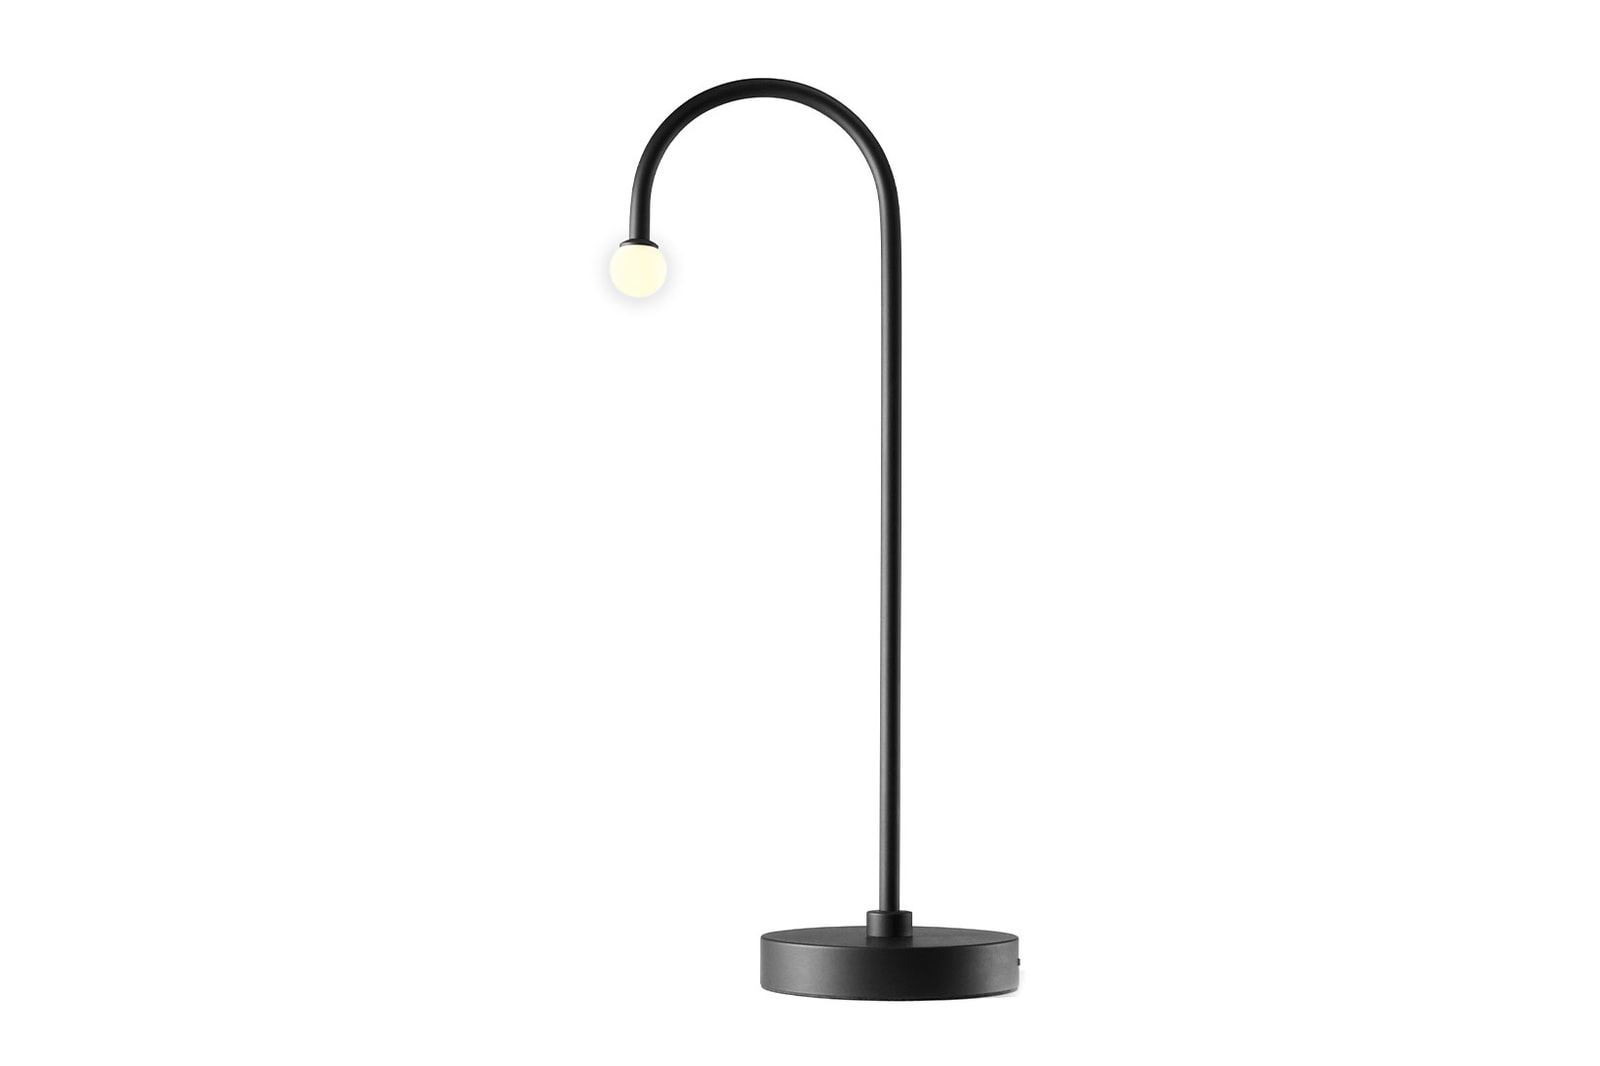 arca portable lamp philippe malouin matter made led light minimalist home design price 